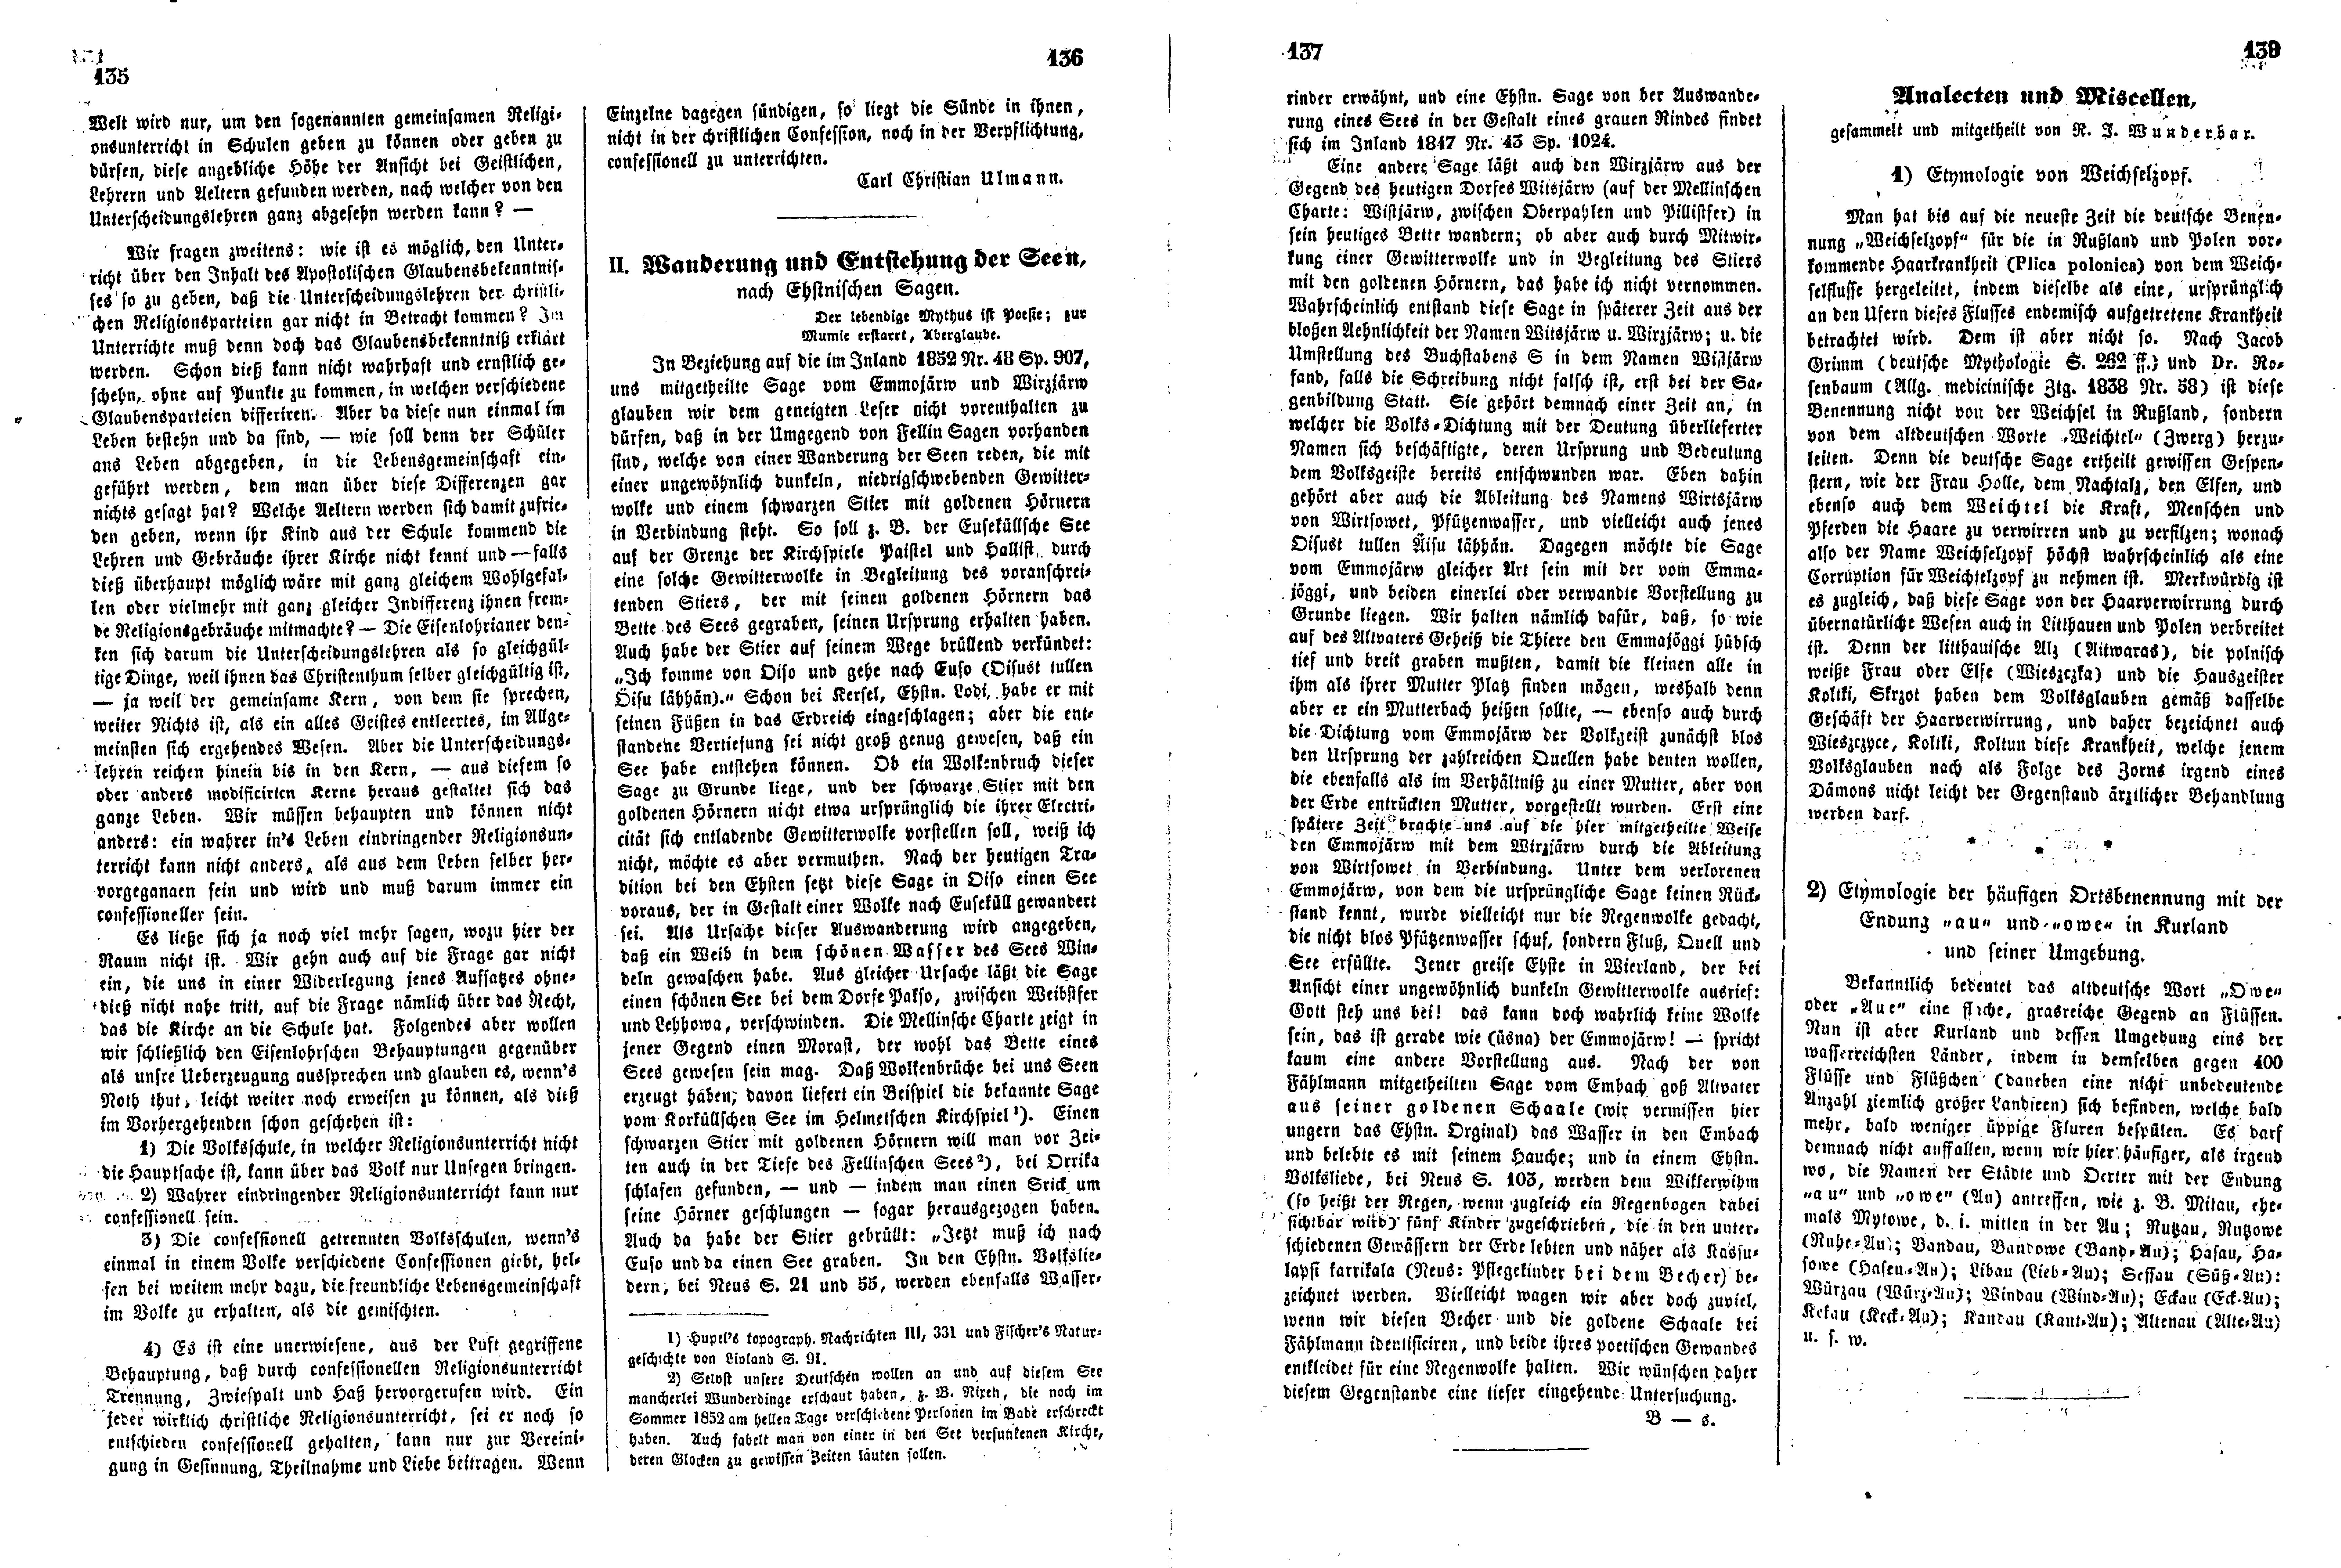 Das Inland [18] (1853) | 44. (135-138) Main body of text